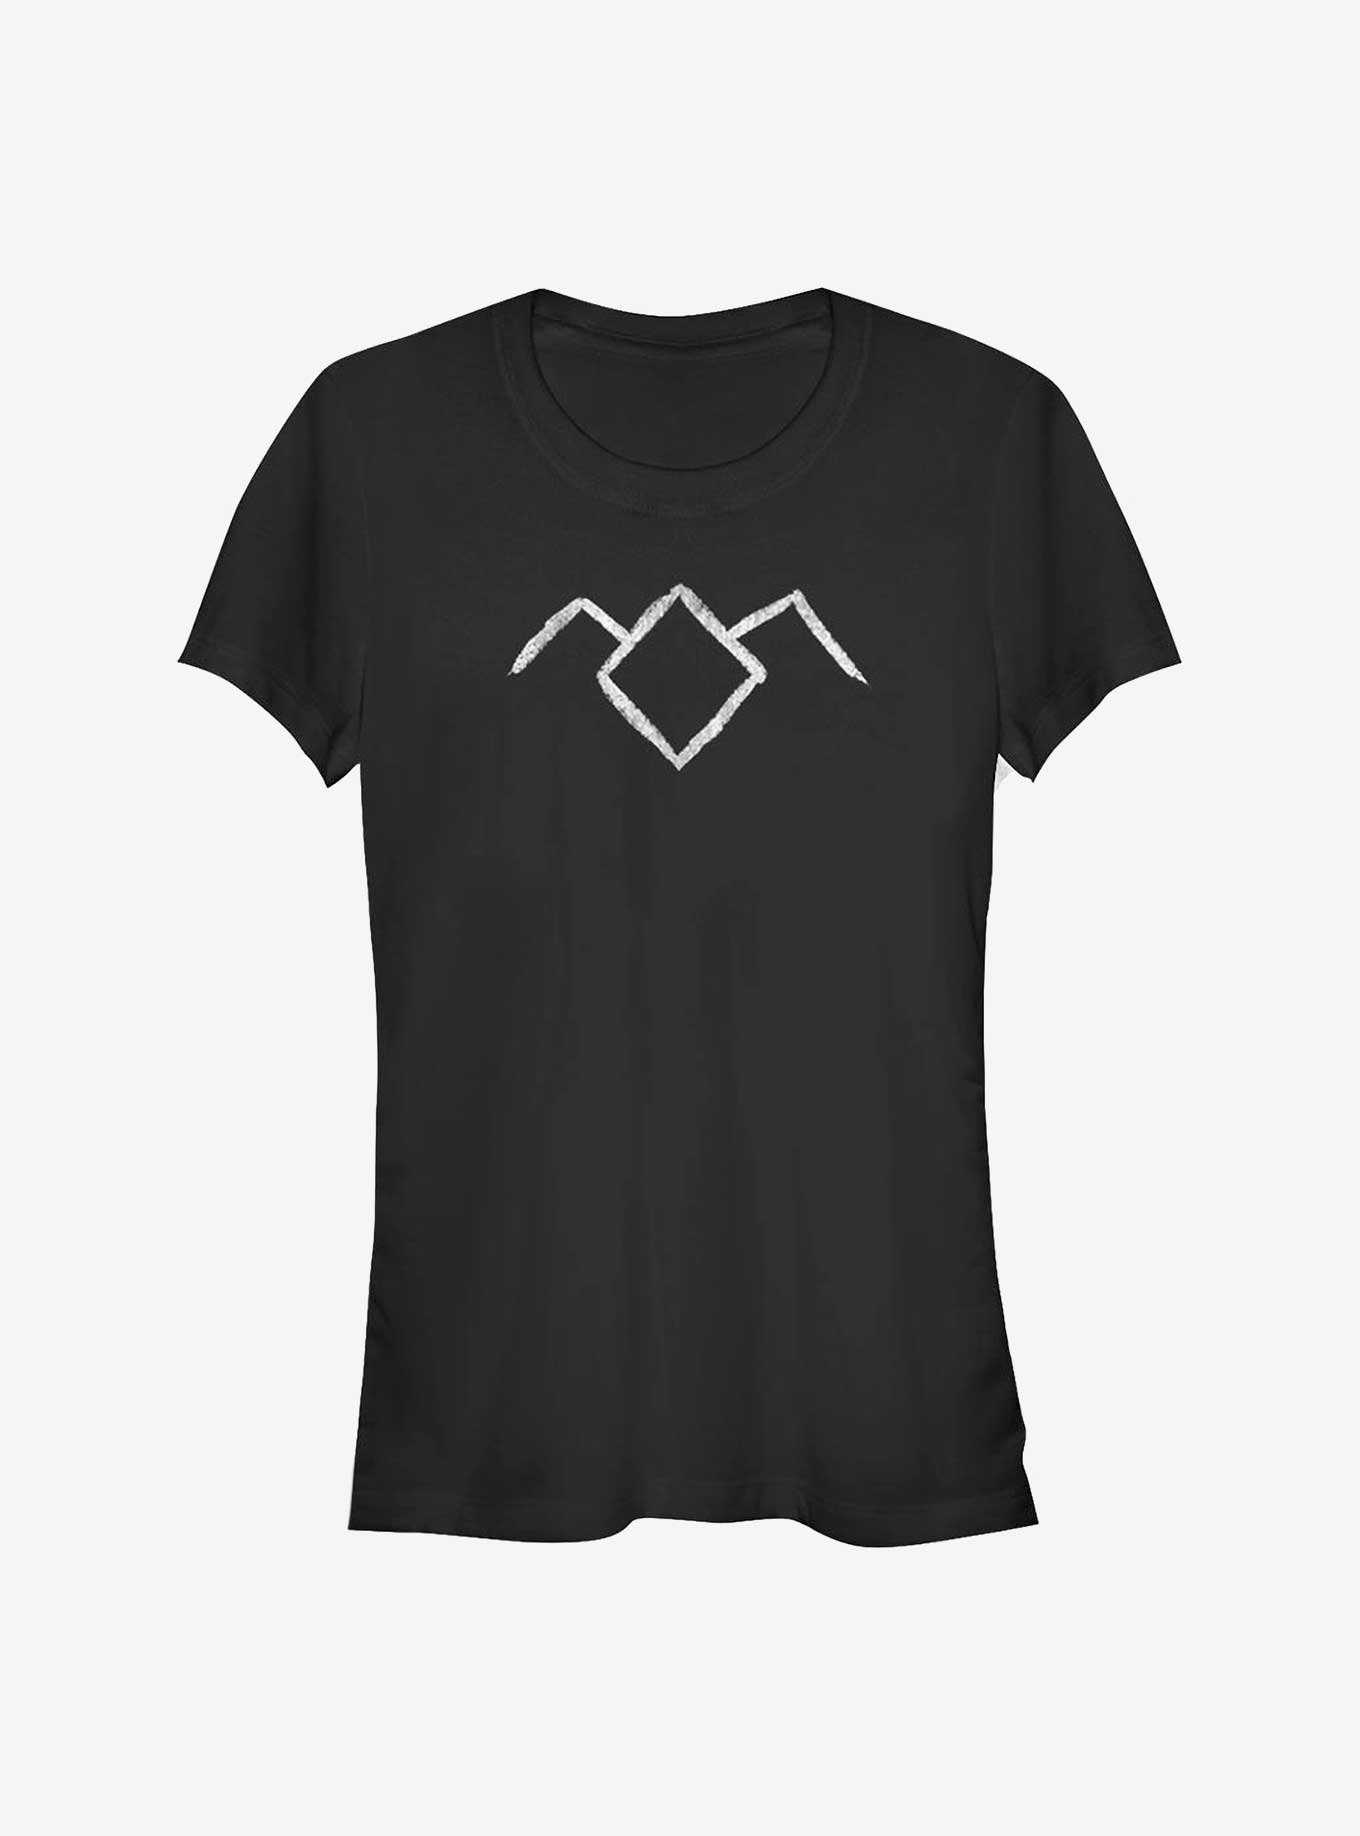 Twin Peaks Symbols Girls T-Shirt, , hi-res